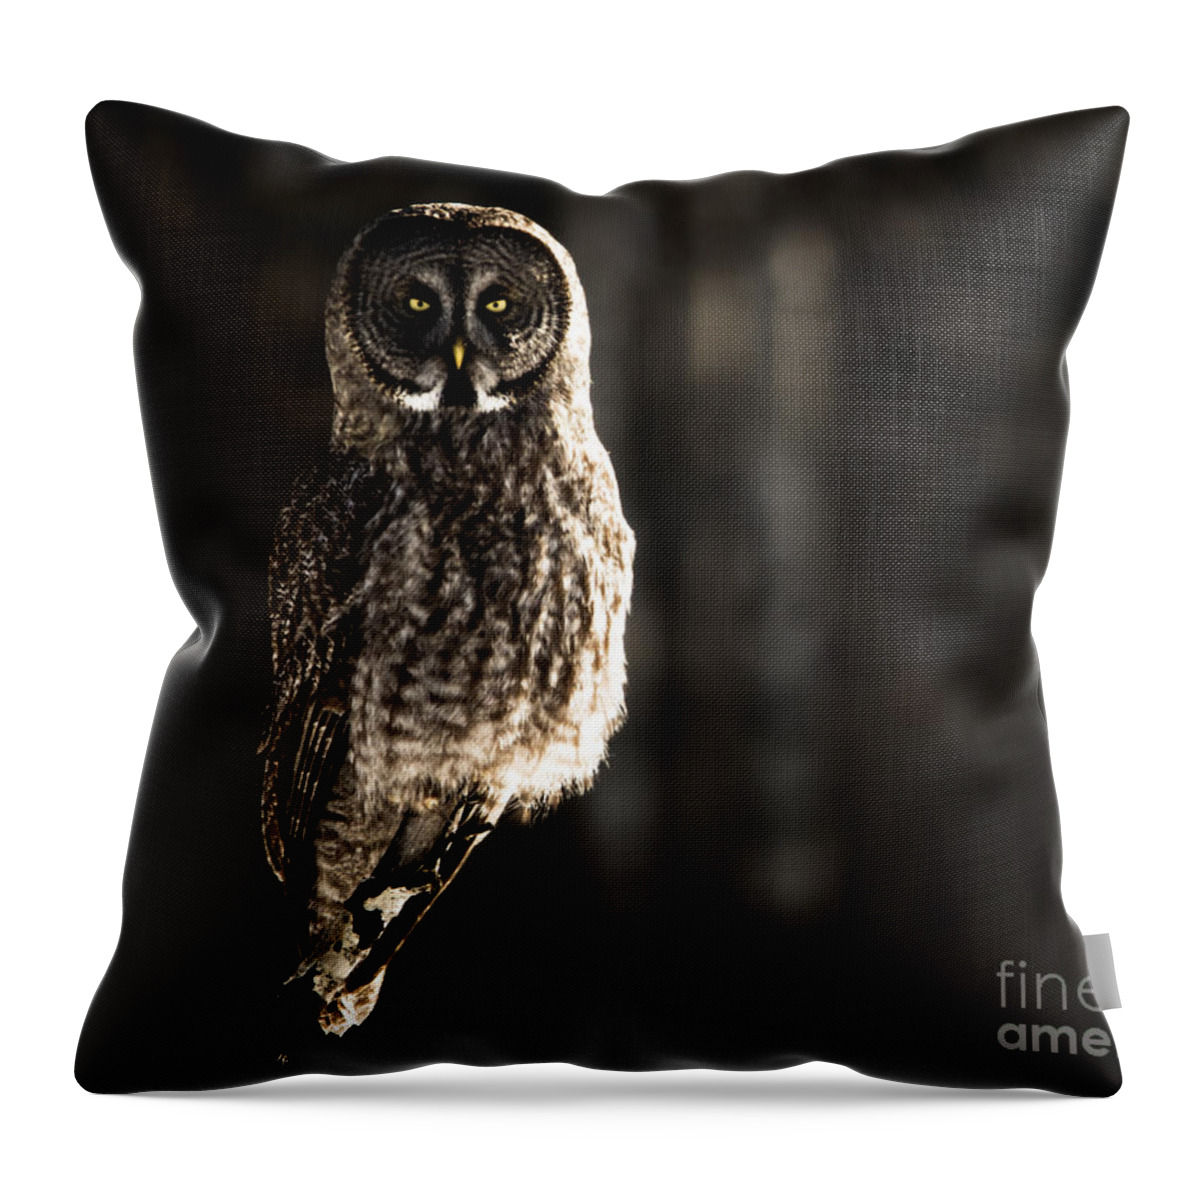 Owl Throw Pillow featuring the photograph Unshaken by Lori Dobbs